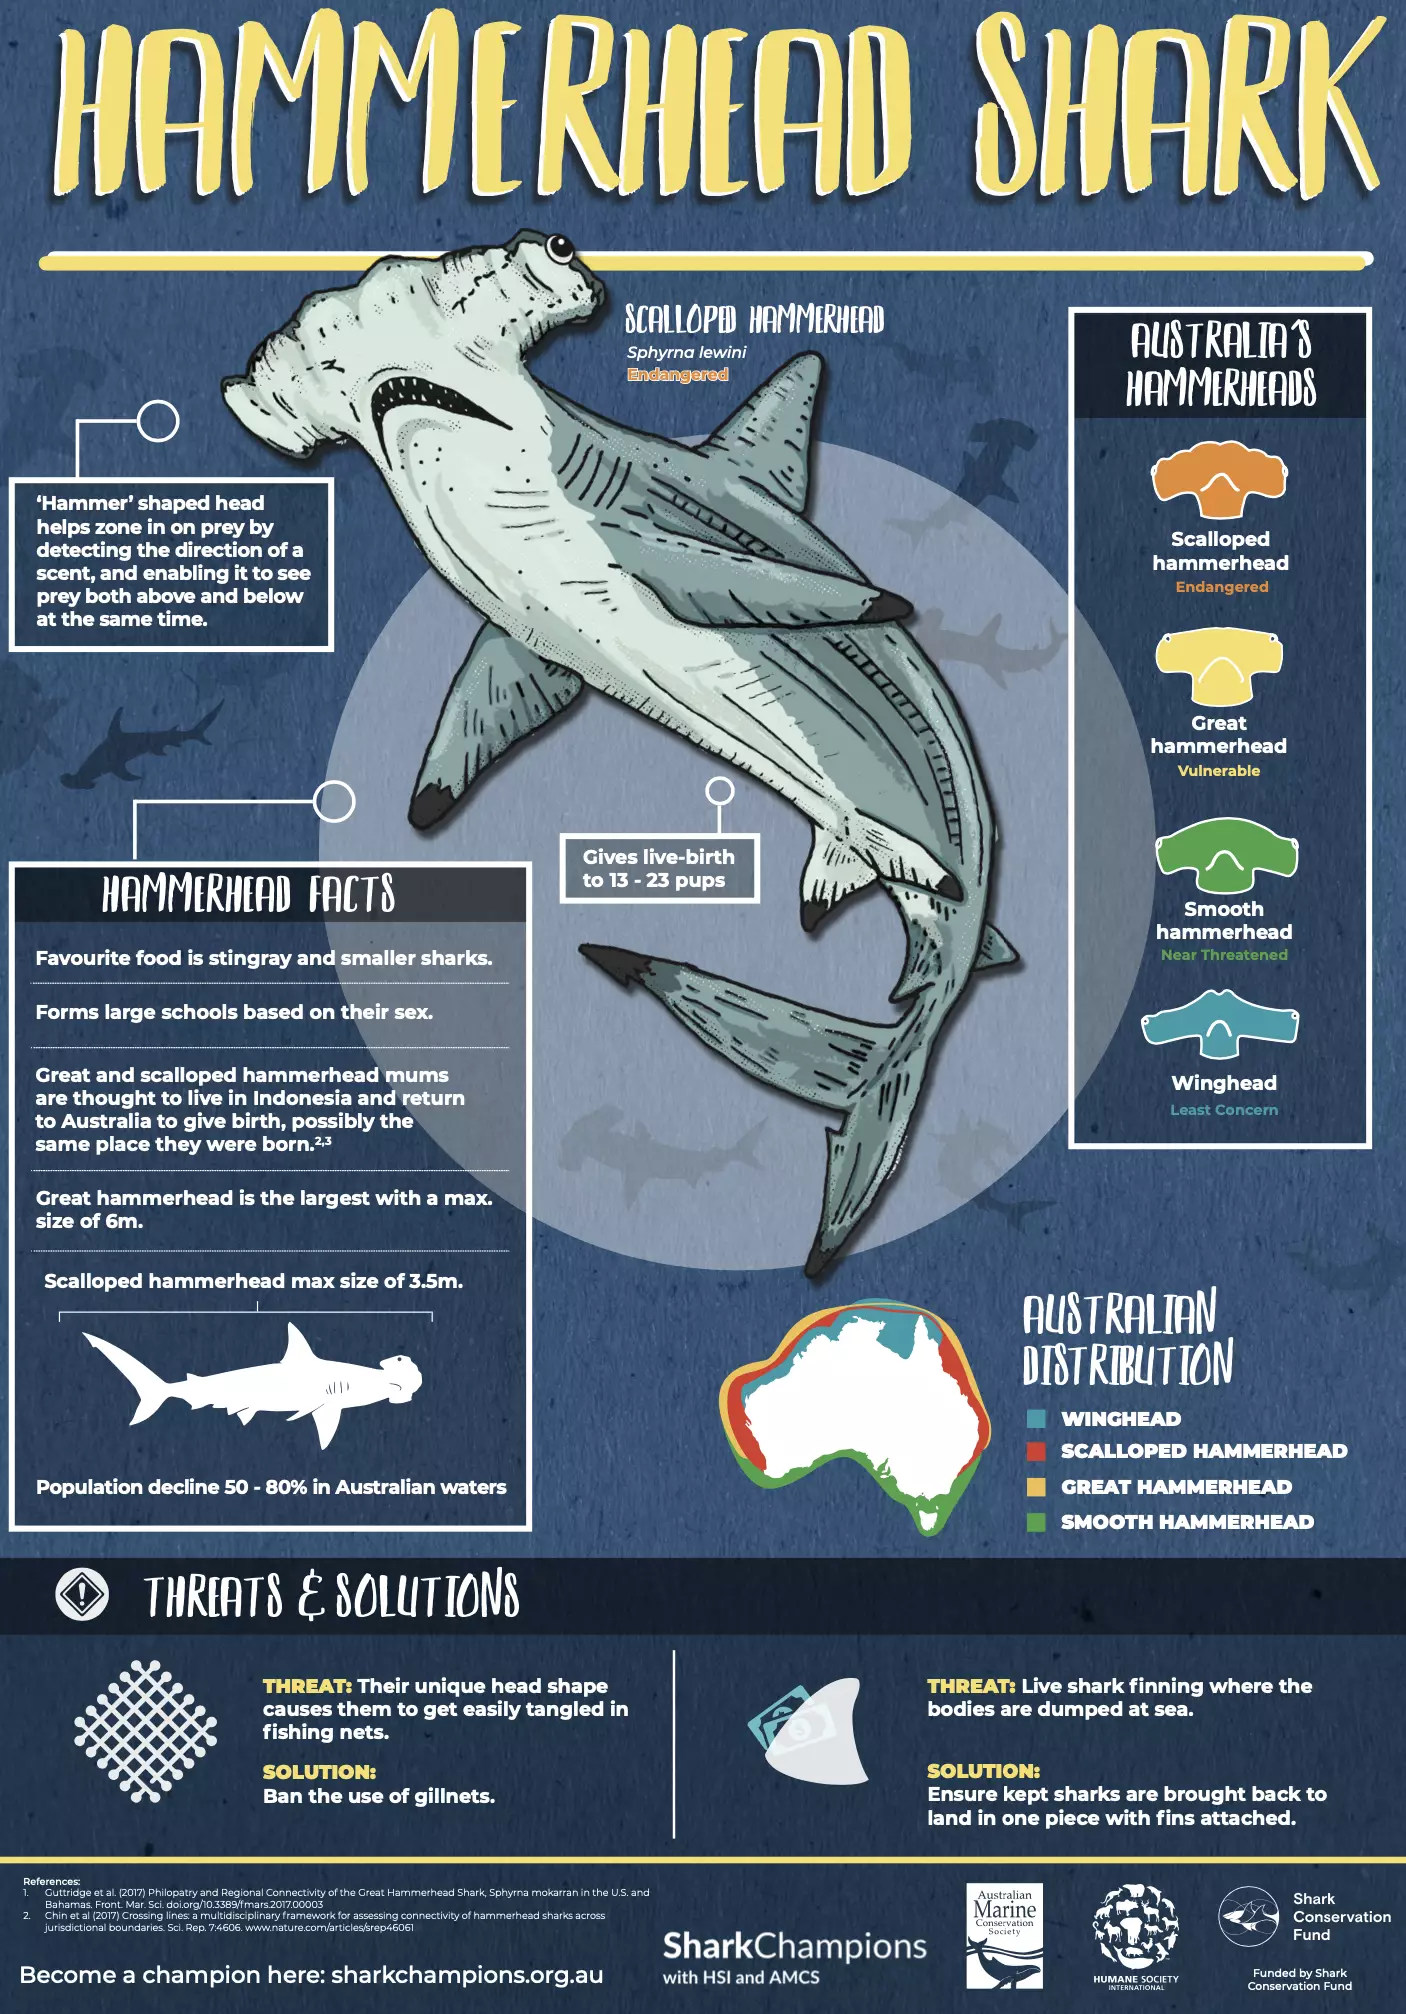 Fun facts about hammerhead sharks.